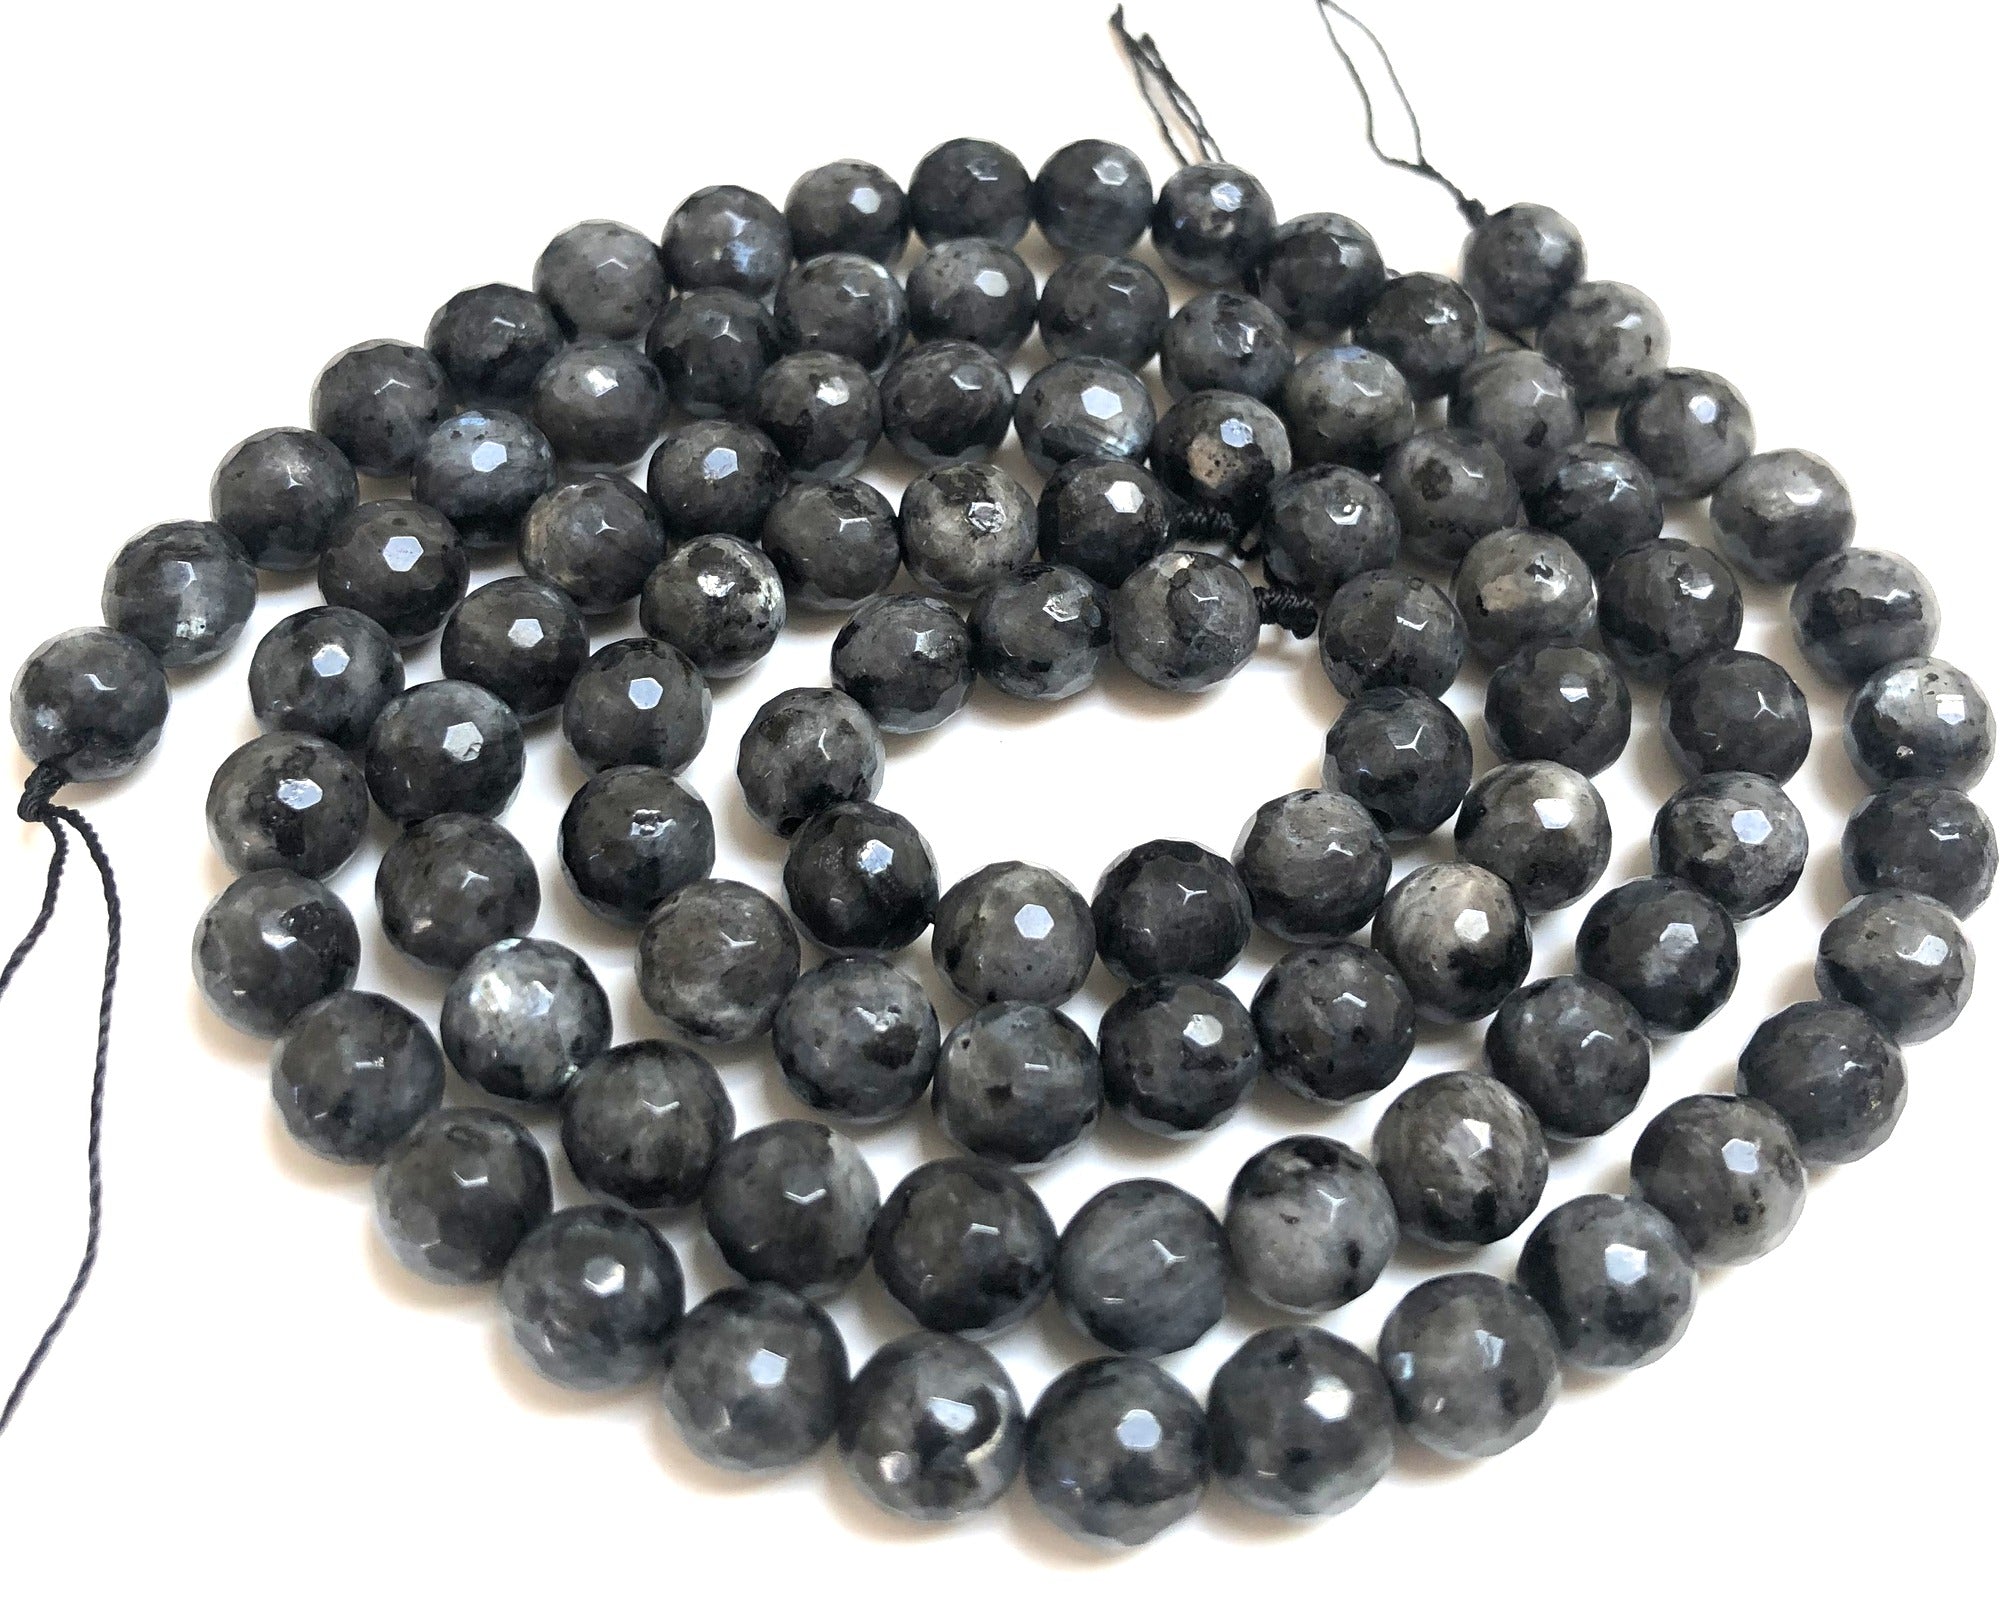 Black Labradorite Larvikite faceted 8mm round gemstone beads 15" strand - Oz Beads 